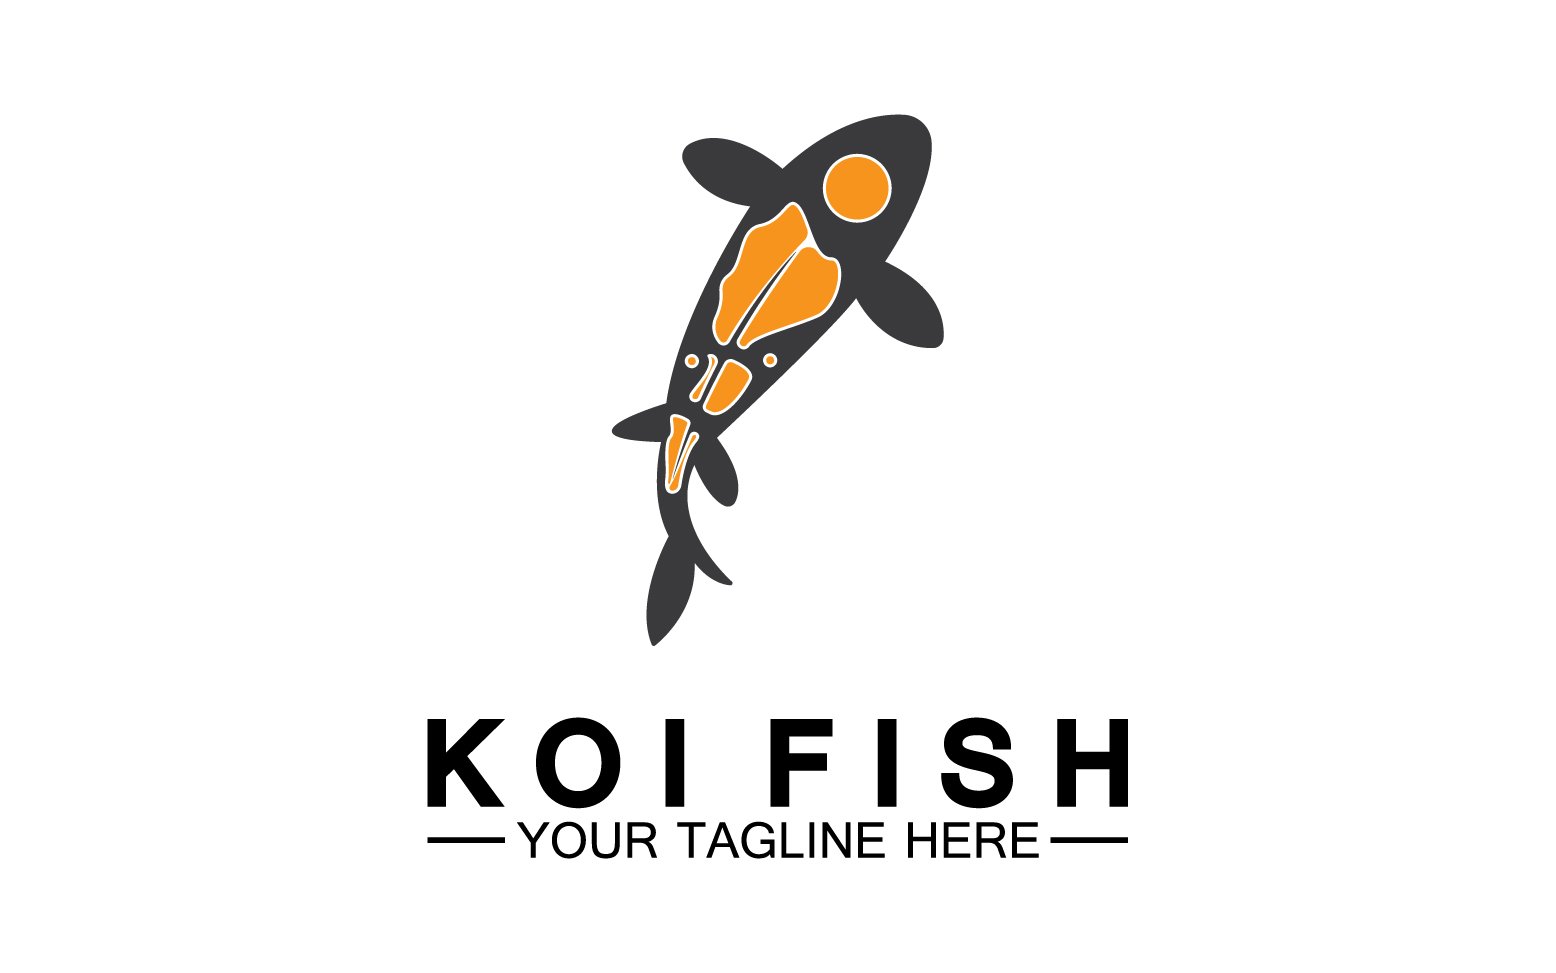 Fish koi black and red icon logo vector v22